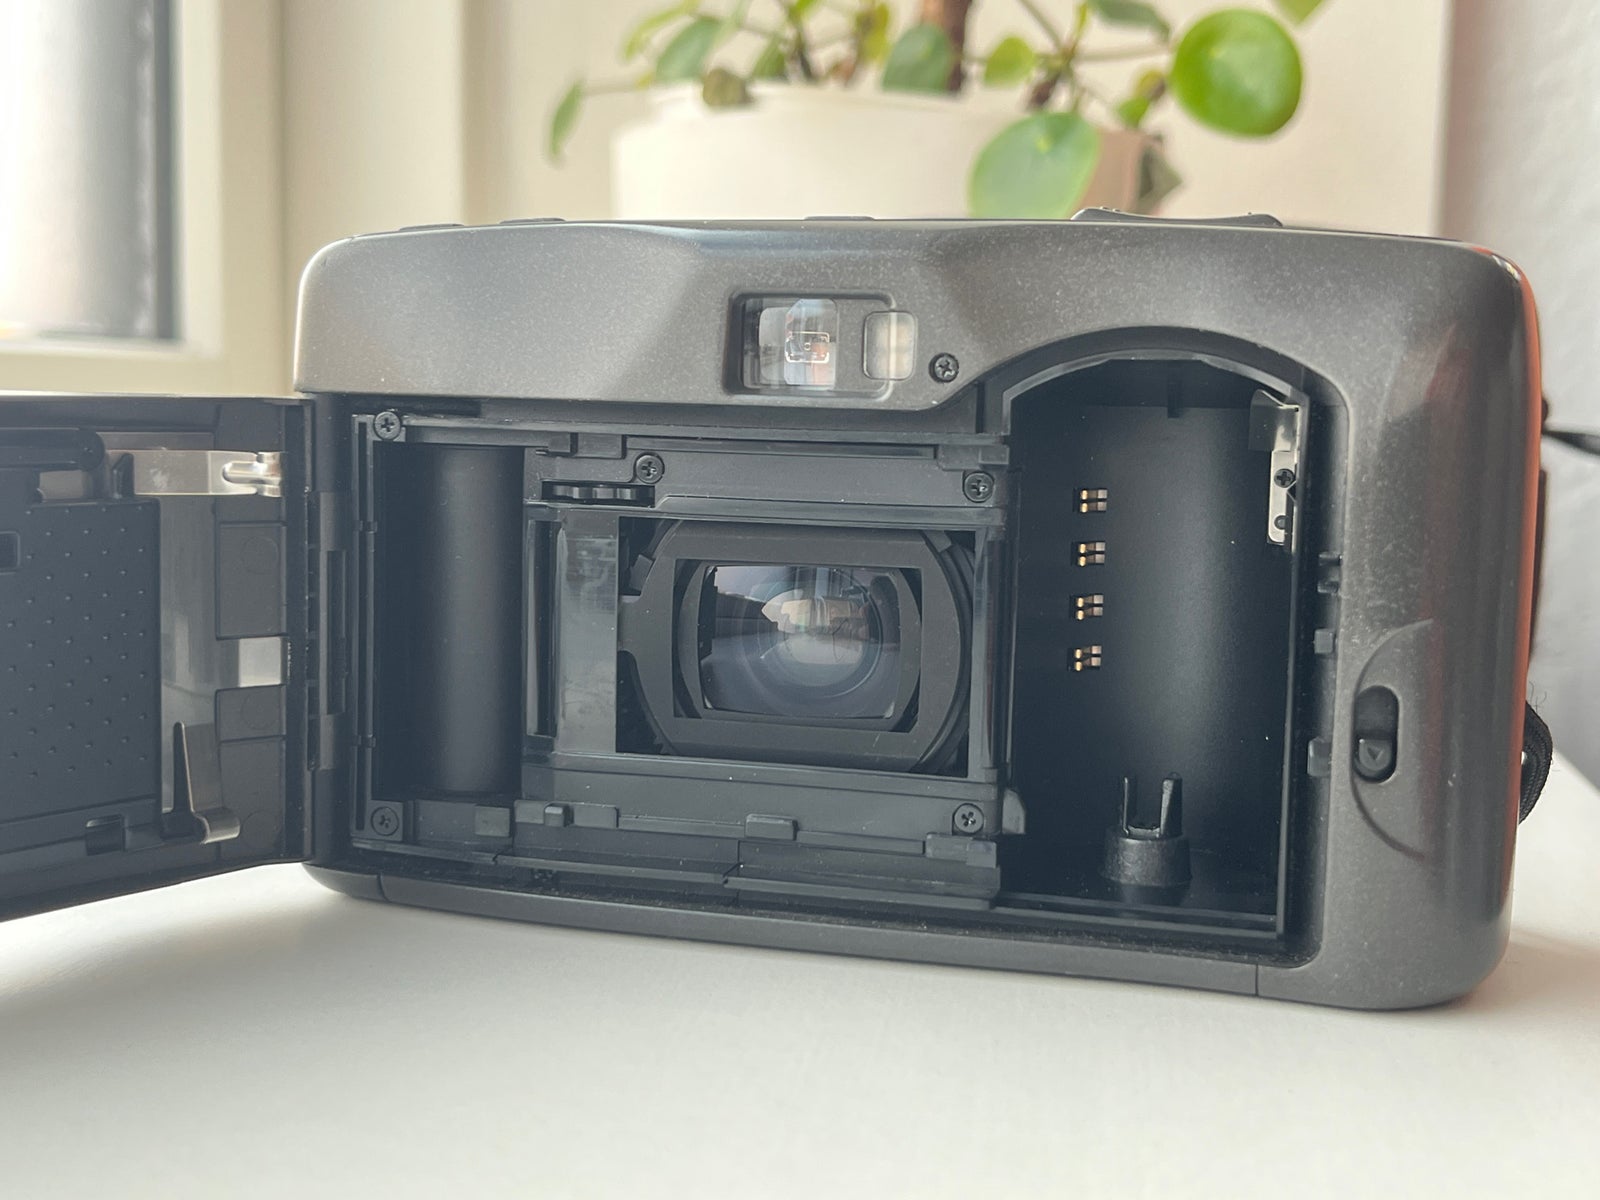 Leica, Mini zoom, Perfekt